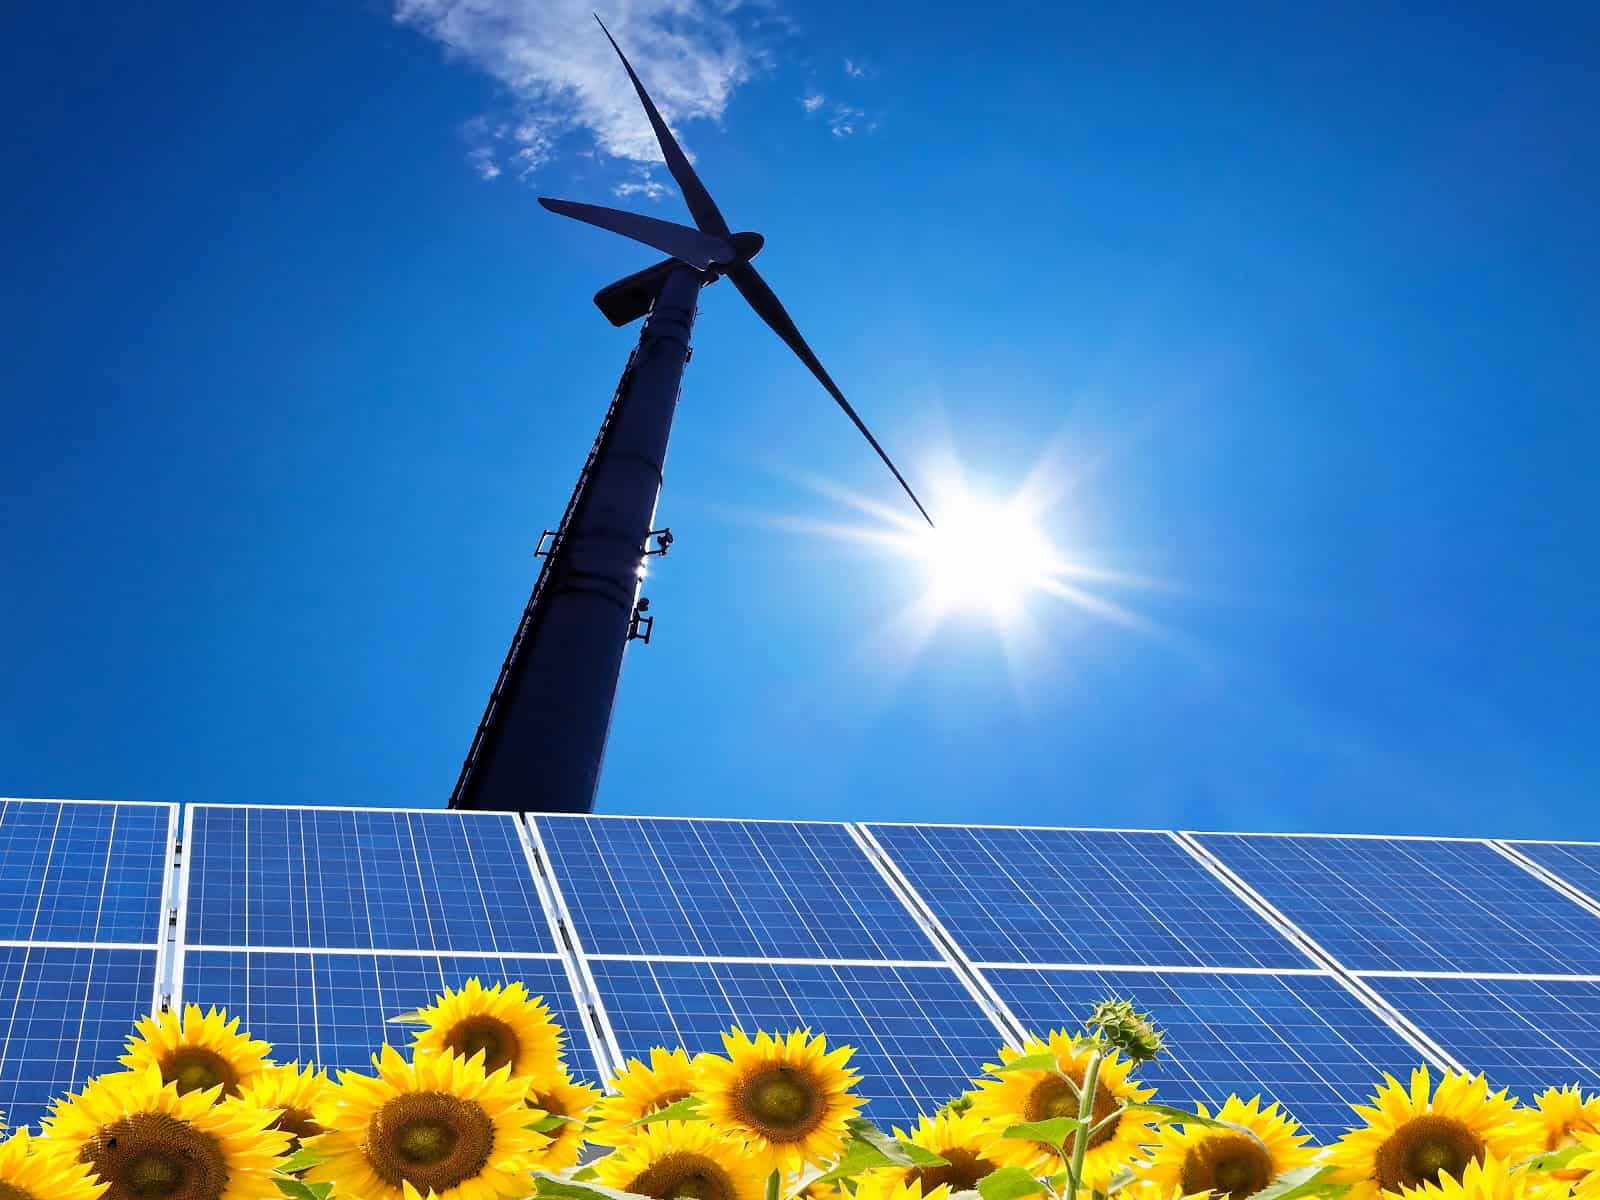 solar-wind-create-economic-benefits-in-nevada-seia